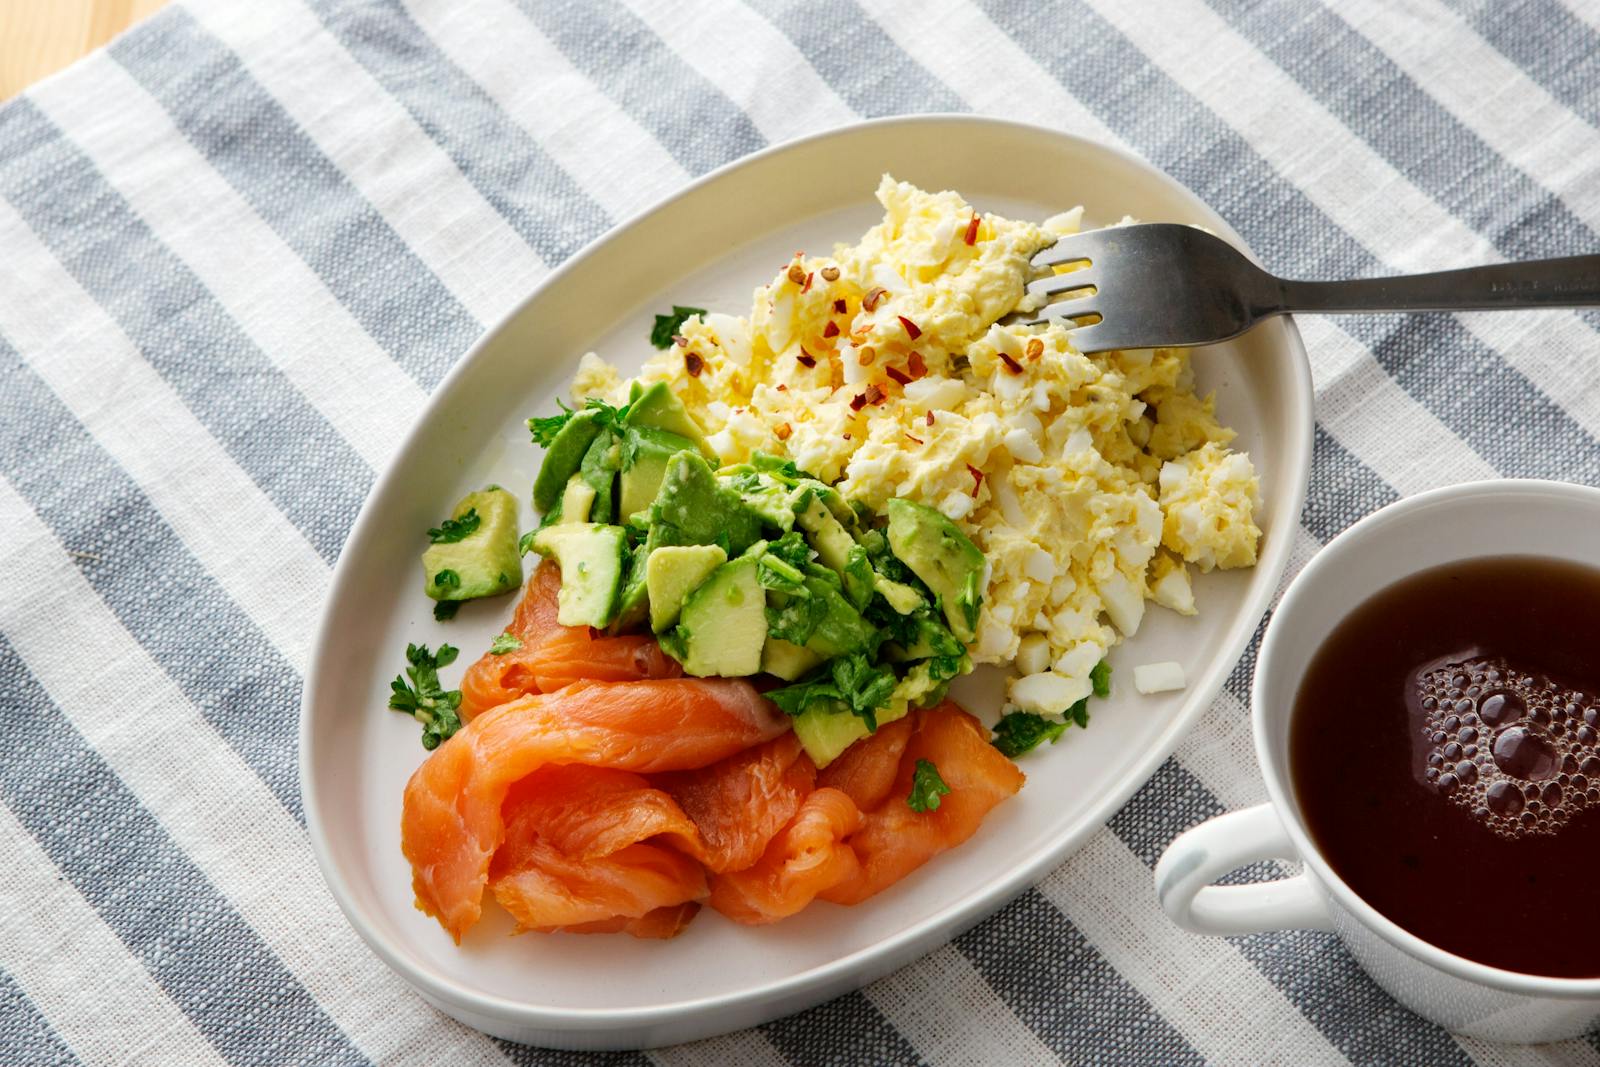 breakfast ideas on keto diet without eggs